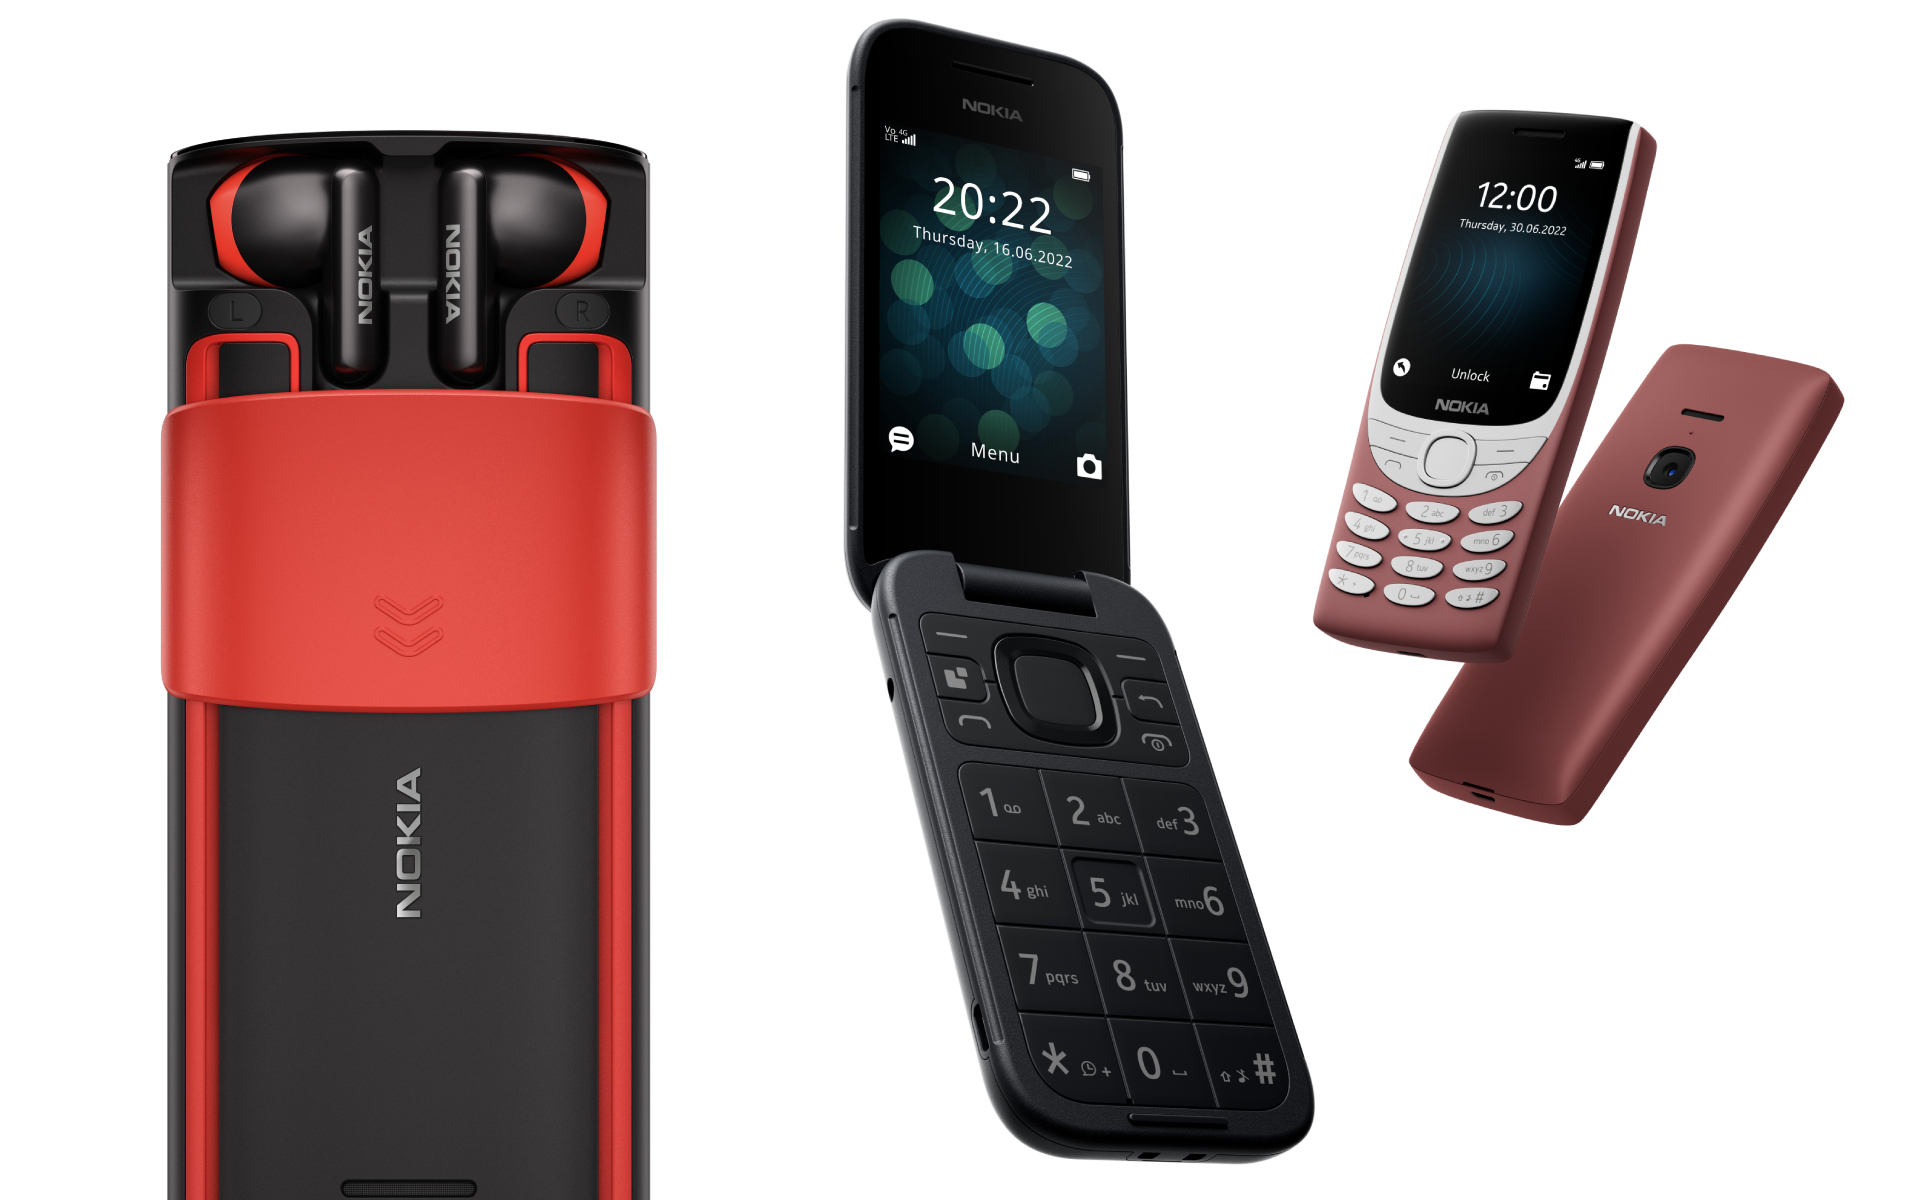 Novinky Nokia 8210 4G, Nokia 2660 Flip a Nokia 5710 XpressAudio